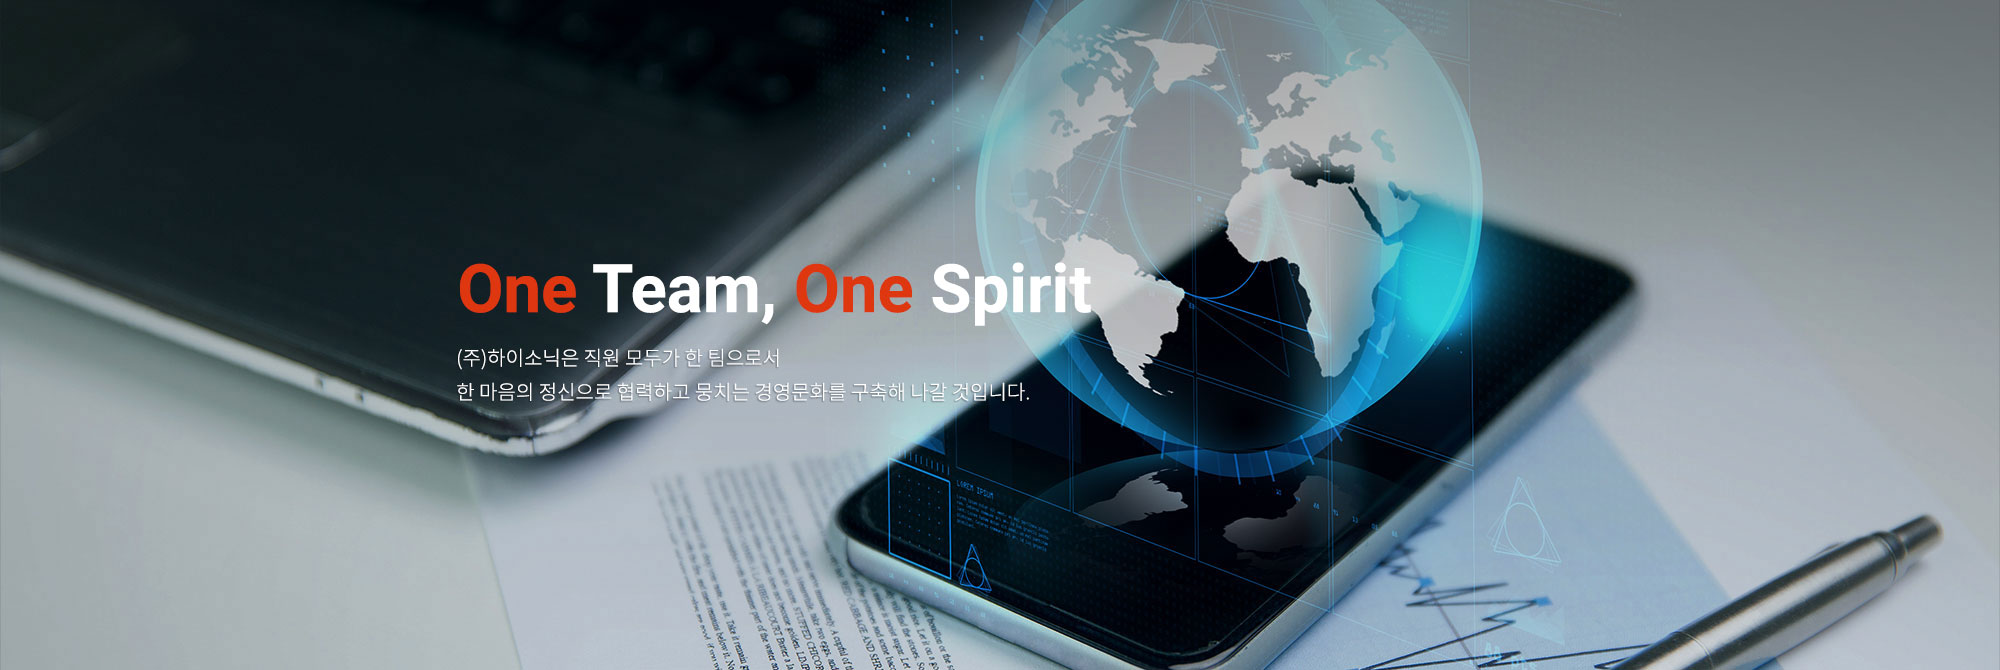 One Team, One Spirit (주)하이소닉은 직원 모두가 한 팀으로서 한 마음의 정신으로 협력하고 뭉치는 경영문화를 구축해 나갈 것입니다.